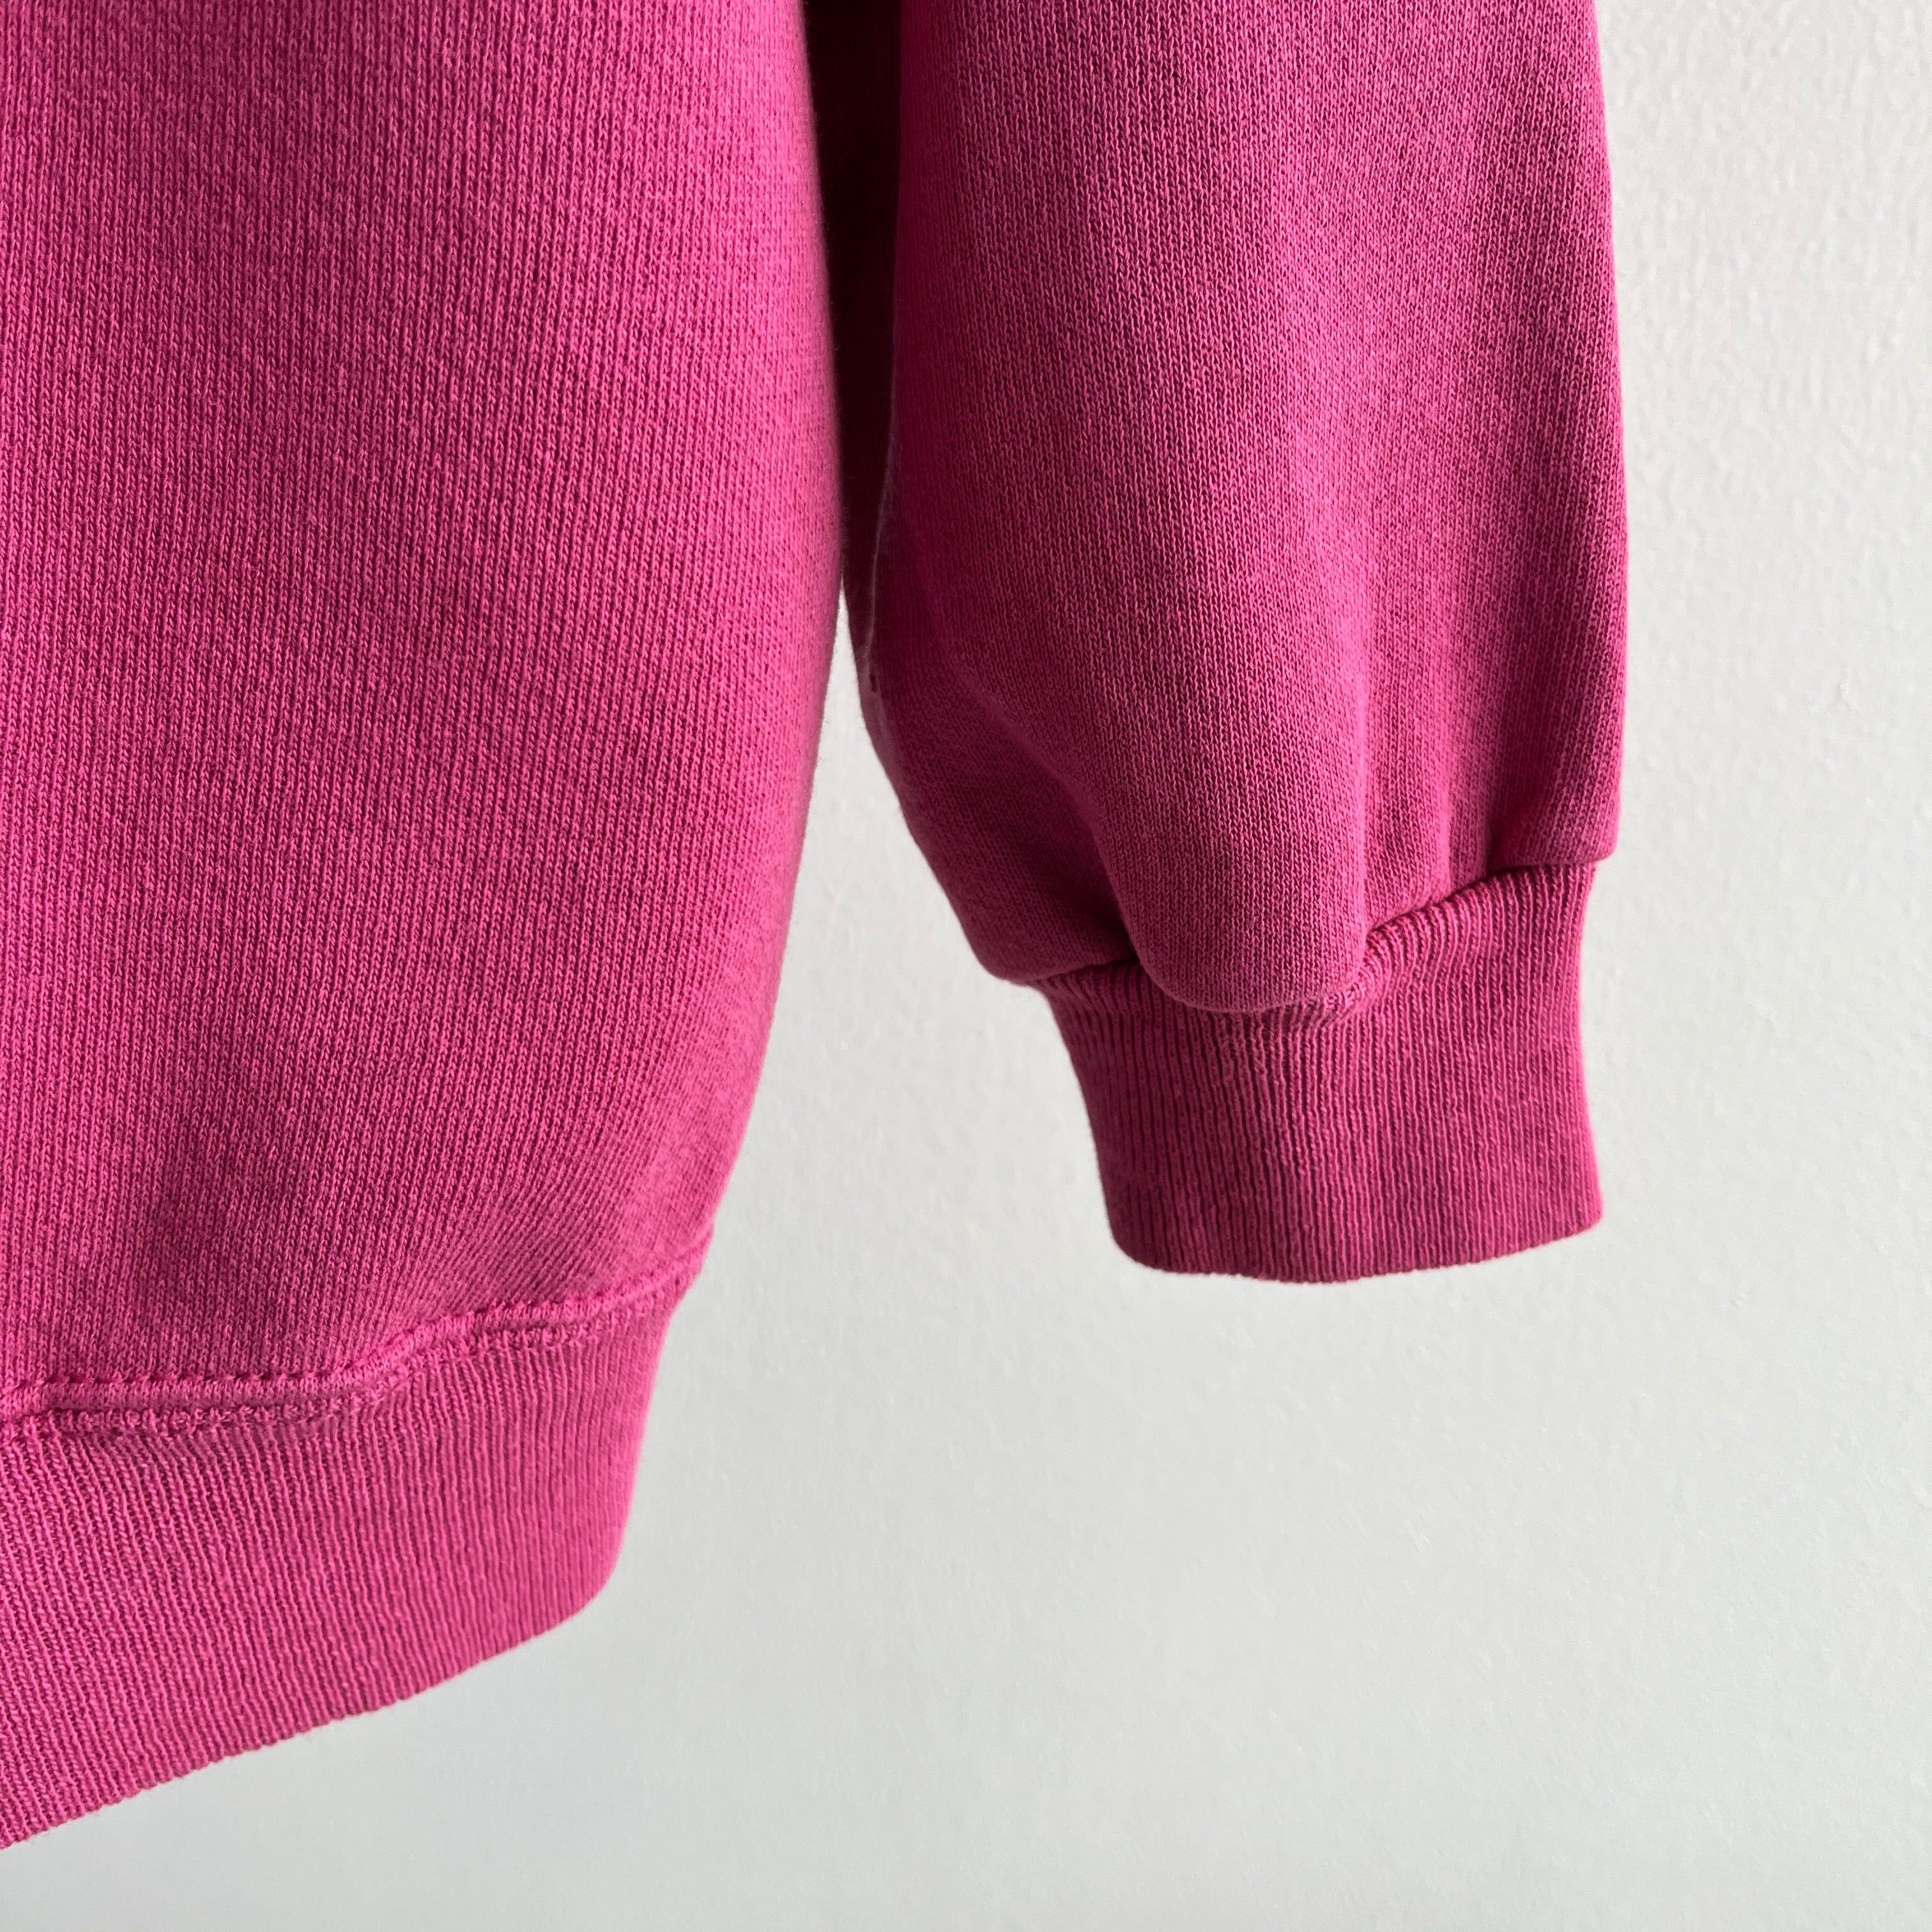 1980/90s Dusty Mauve Blank Perfectly Thin and Worn Raglan Sweatshirt